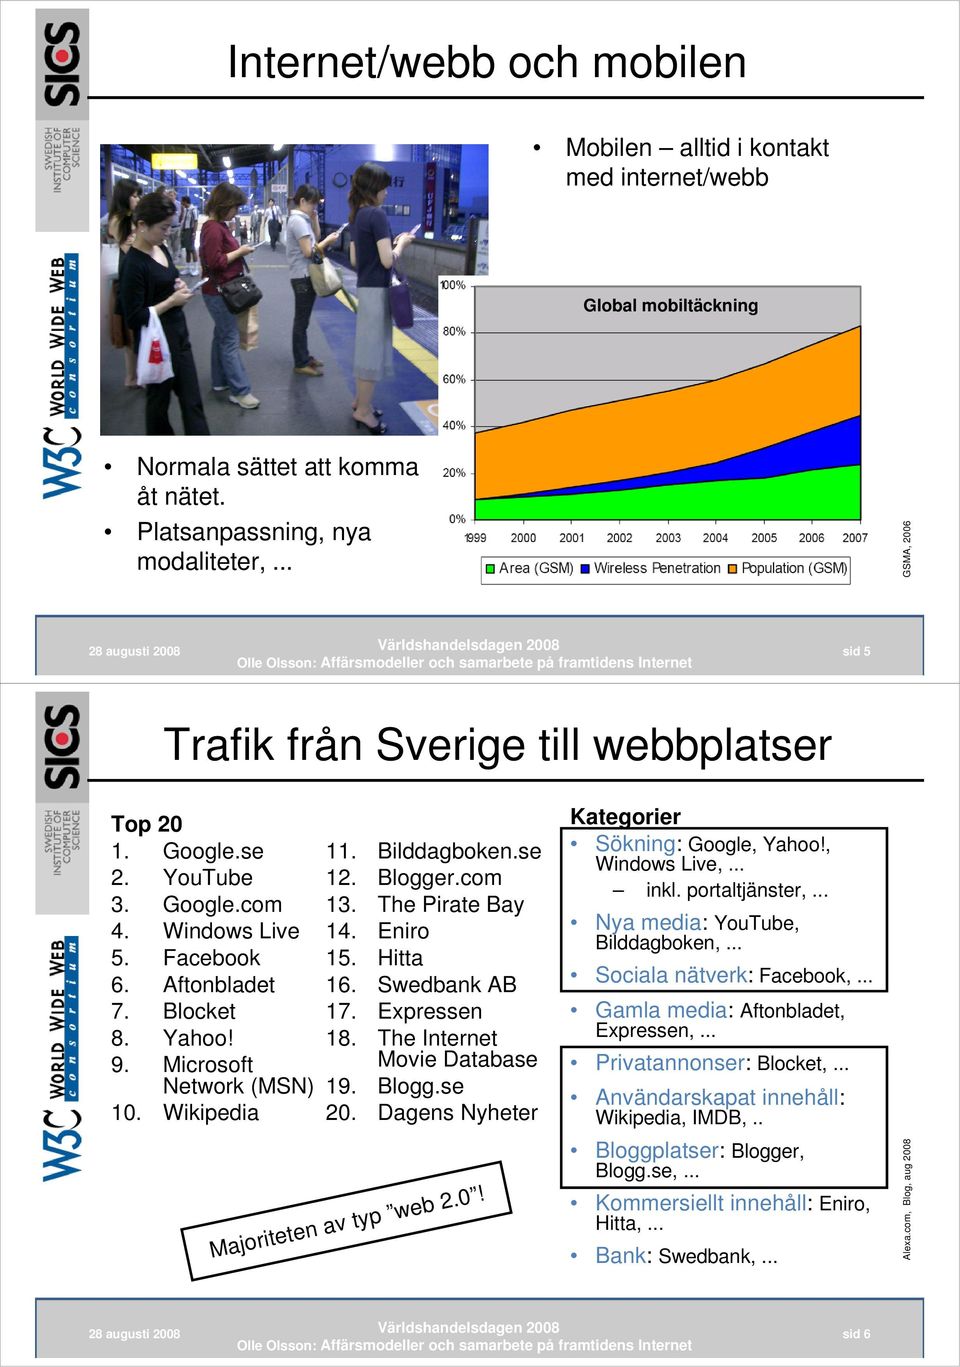 Wikipedia 11. Bilddagboken.se 12. Blogger.com 13. The Pirate Bay 14. Eniro 15. Hitta 16. Swedbank AB 17. Expressen 18. The Internet Movie Database 19. Blogg.se 20.